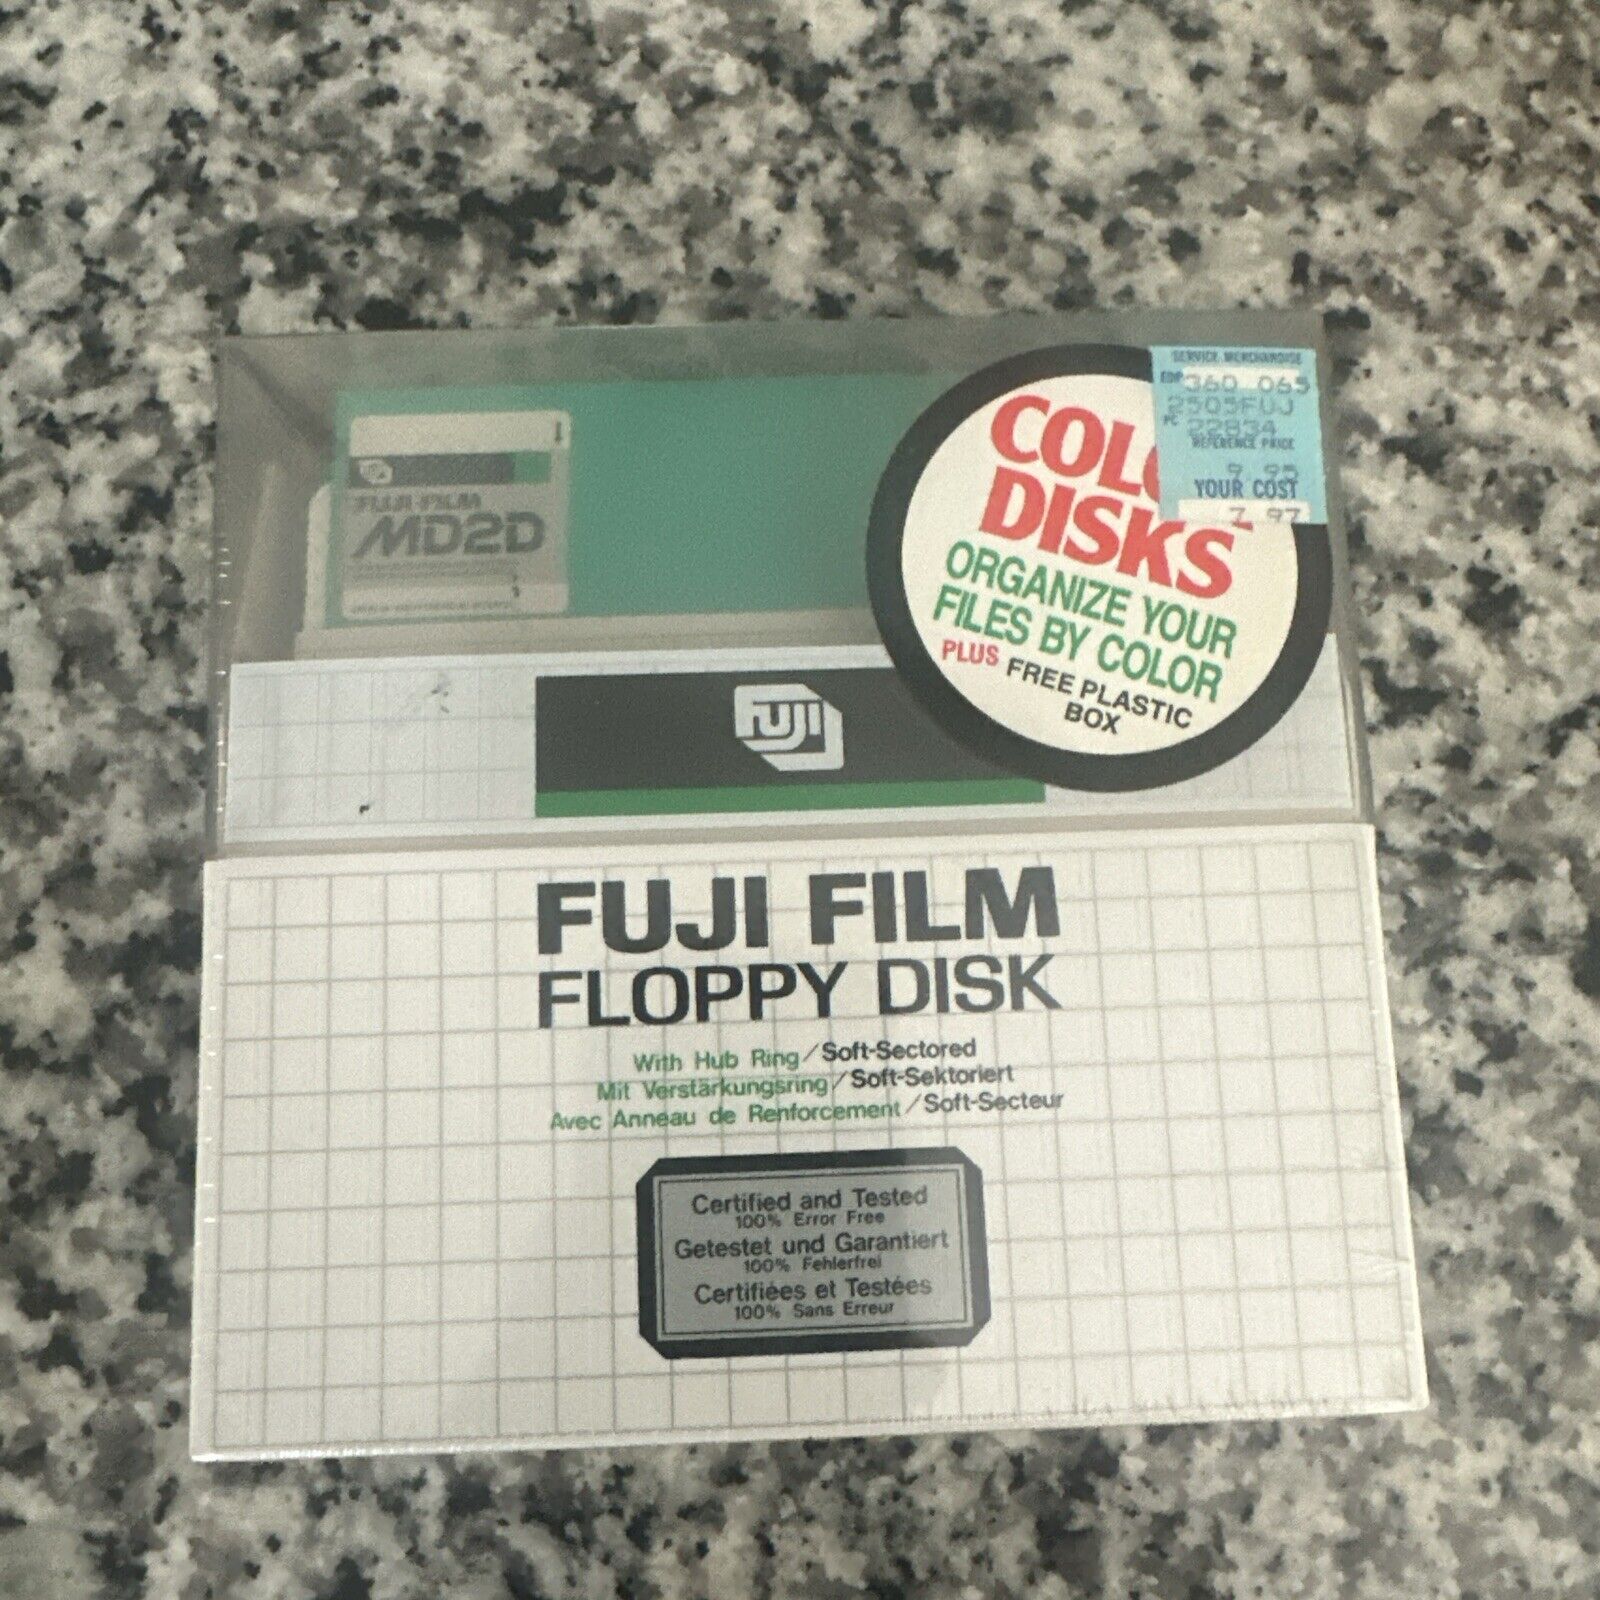 Fuji Film Floppy Disk